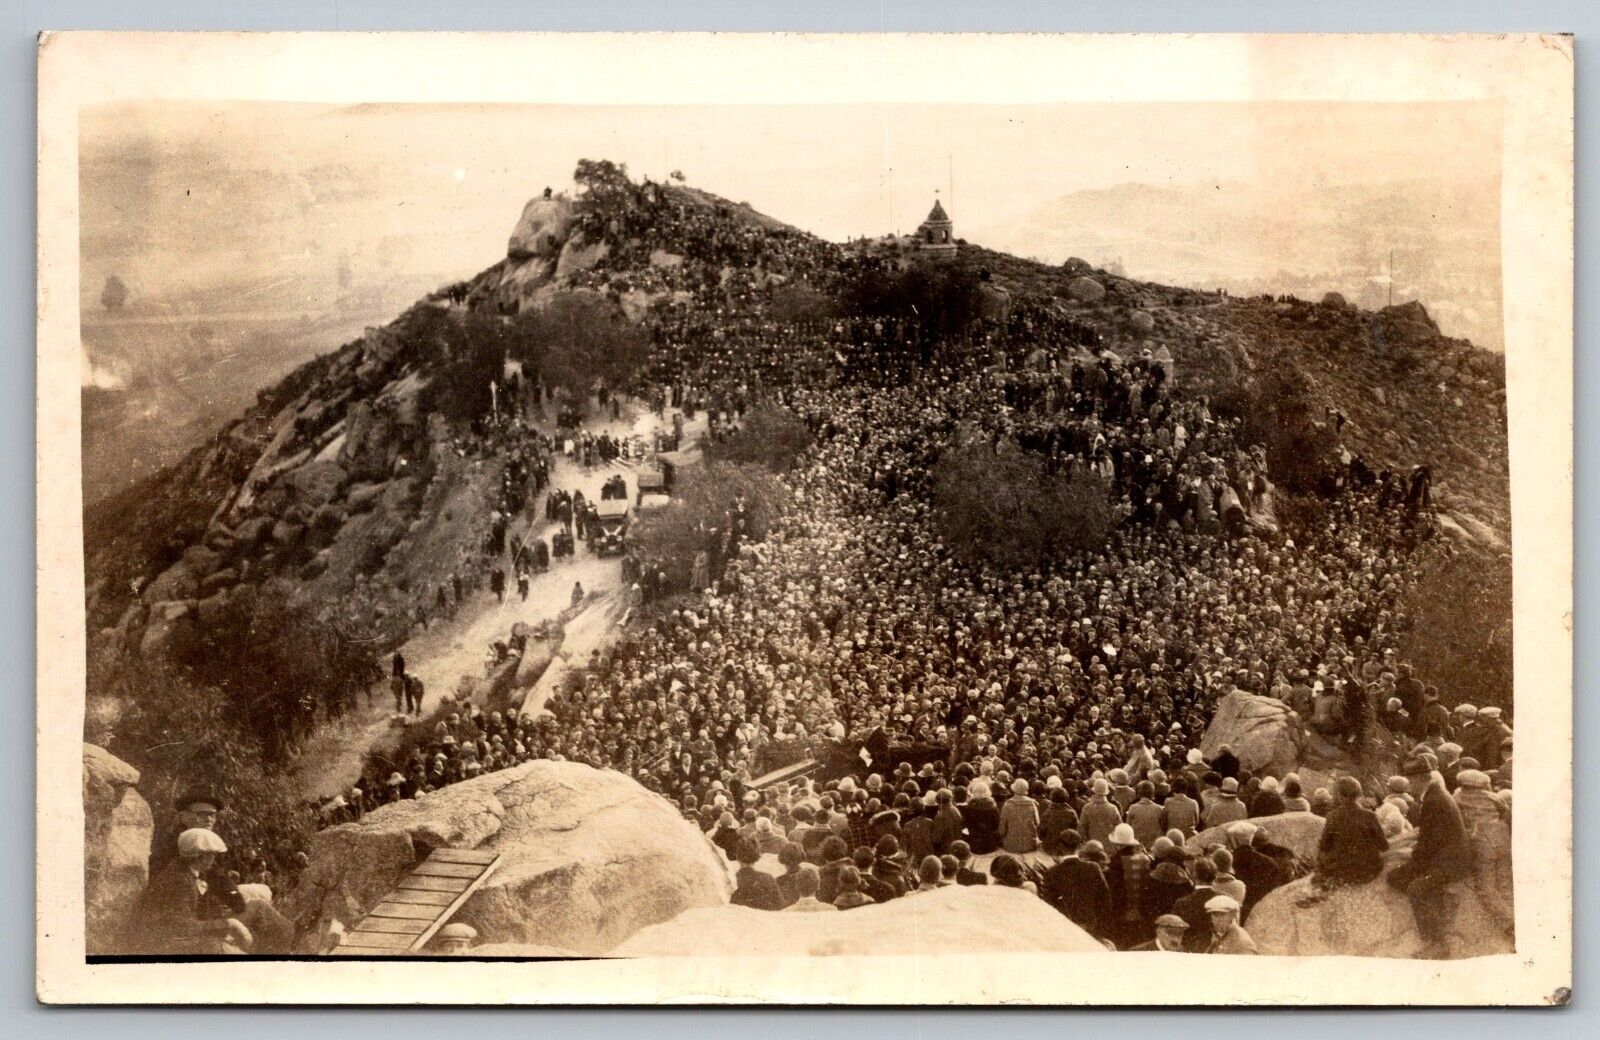 Mt Rubidoux. Large Crowd of People. California Real Photo Postcard RPPC